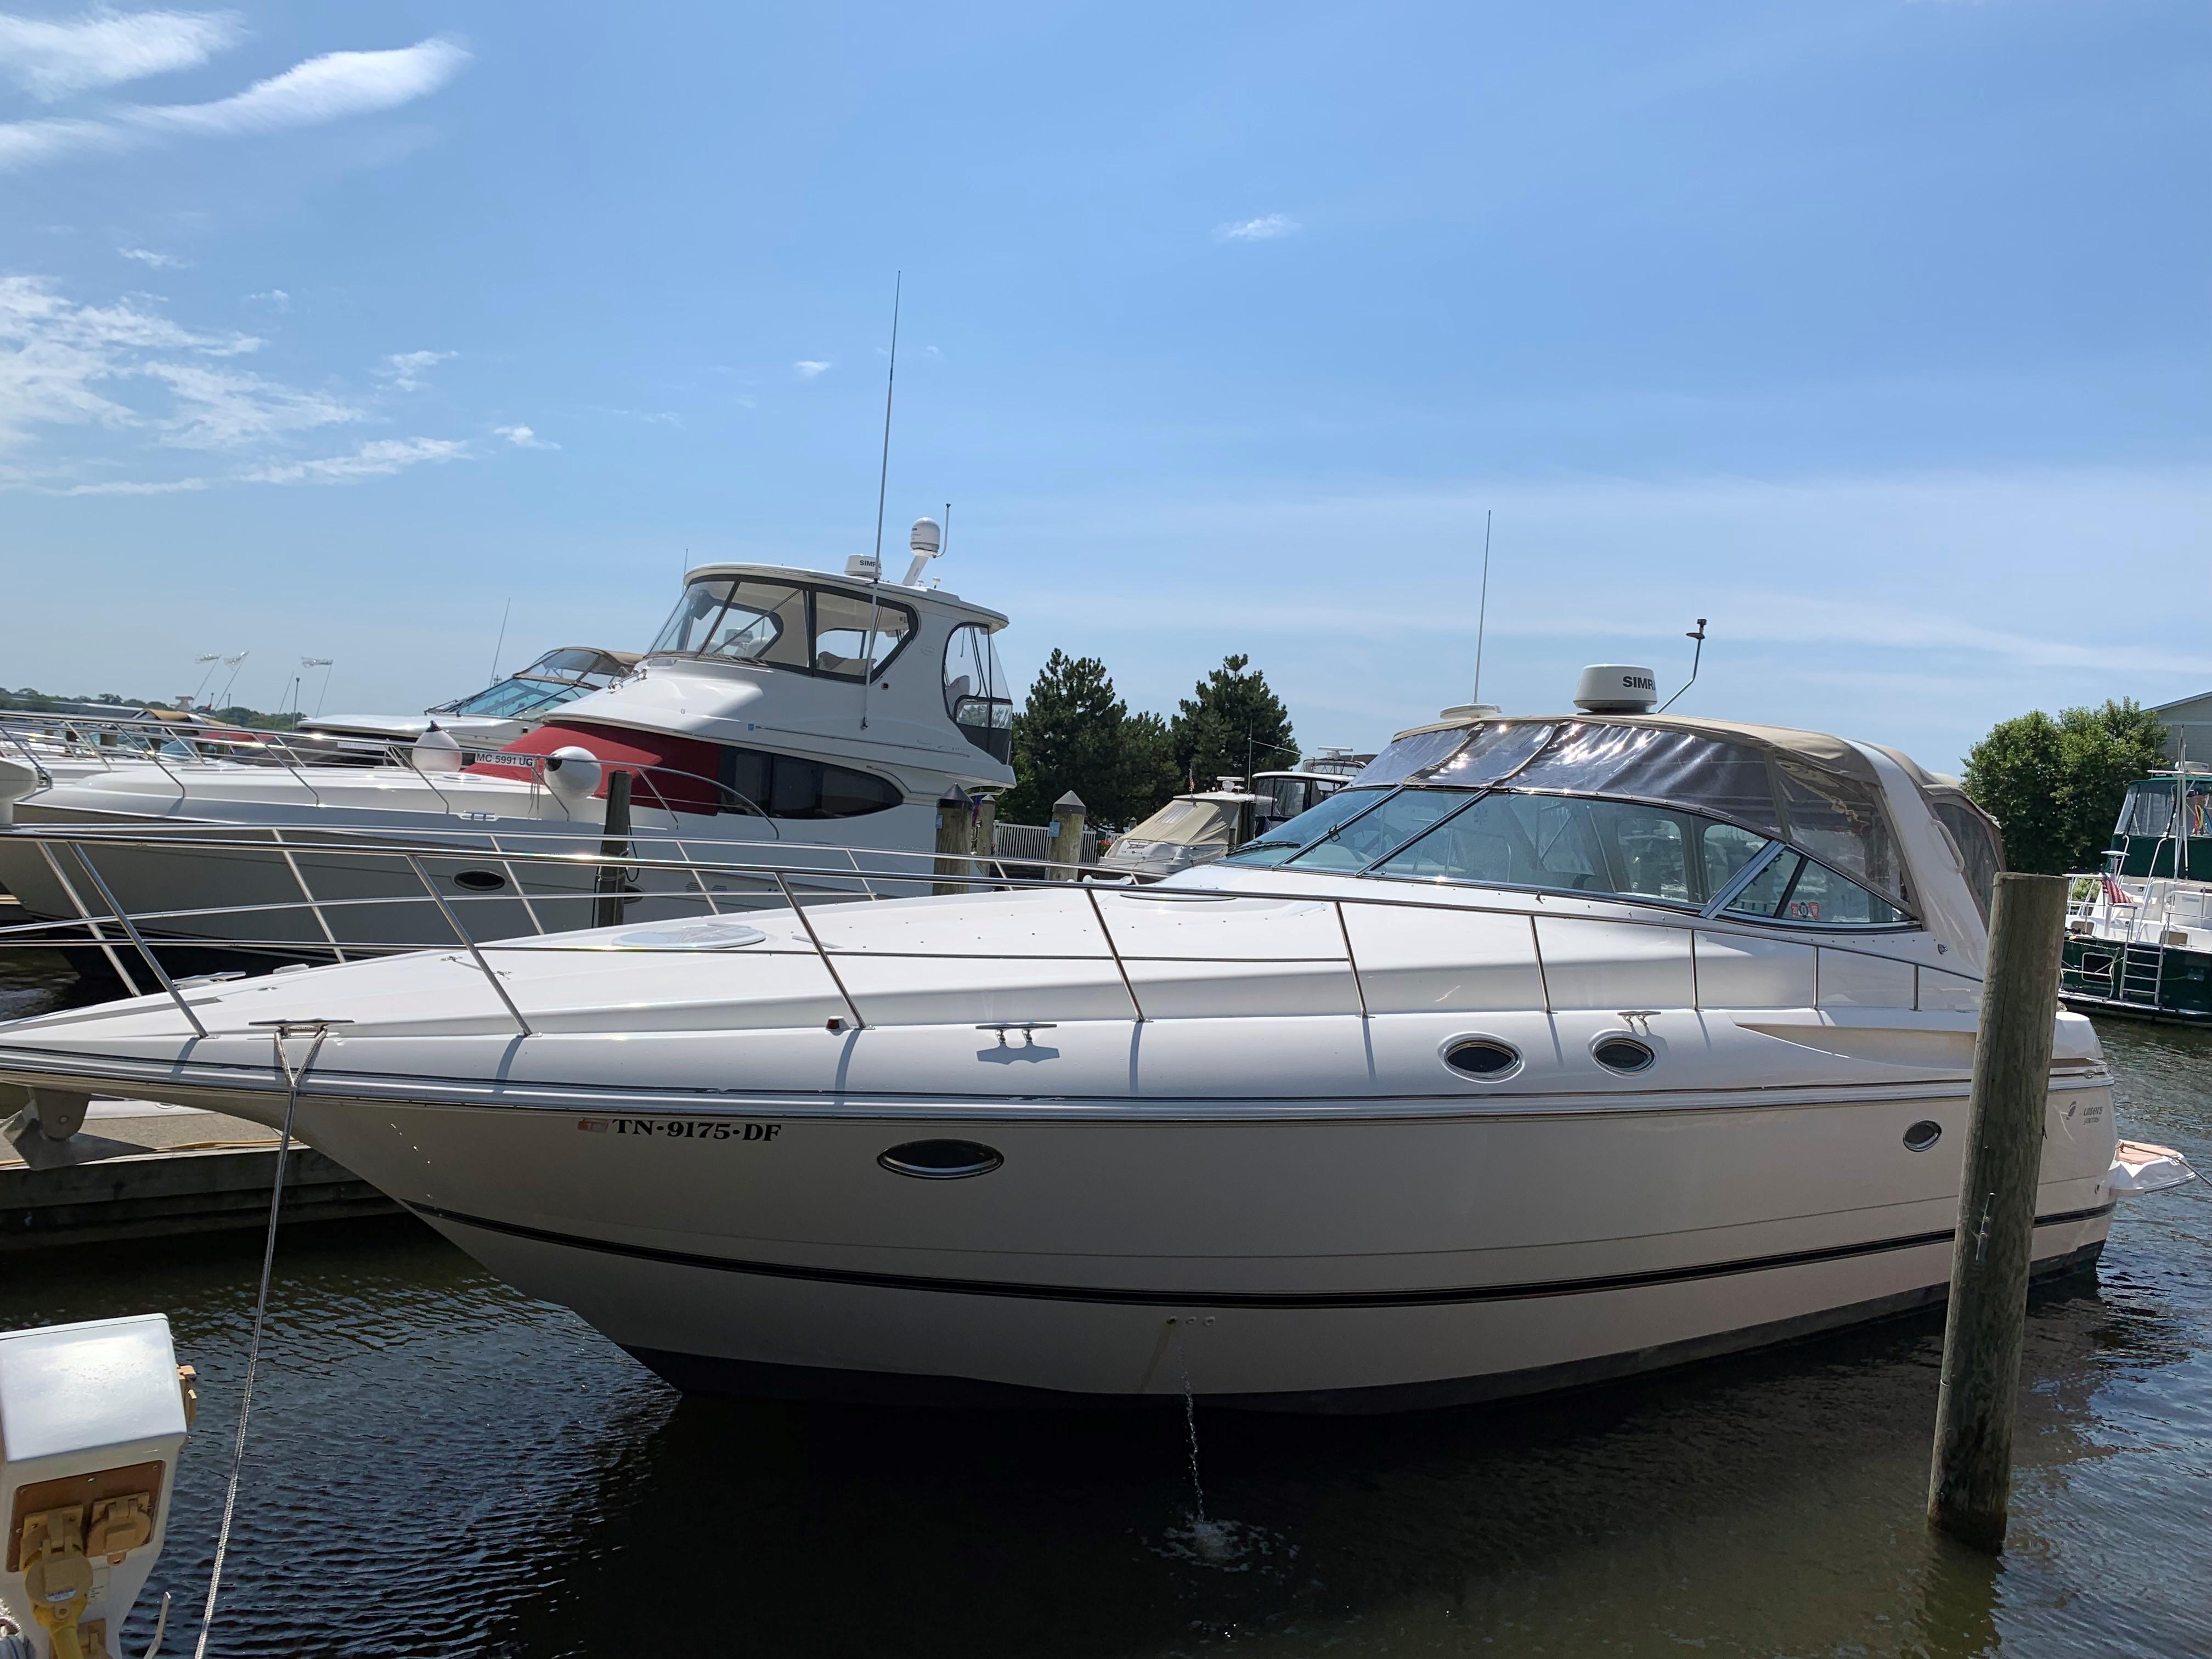 yachts for sale lake michigan